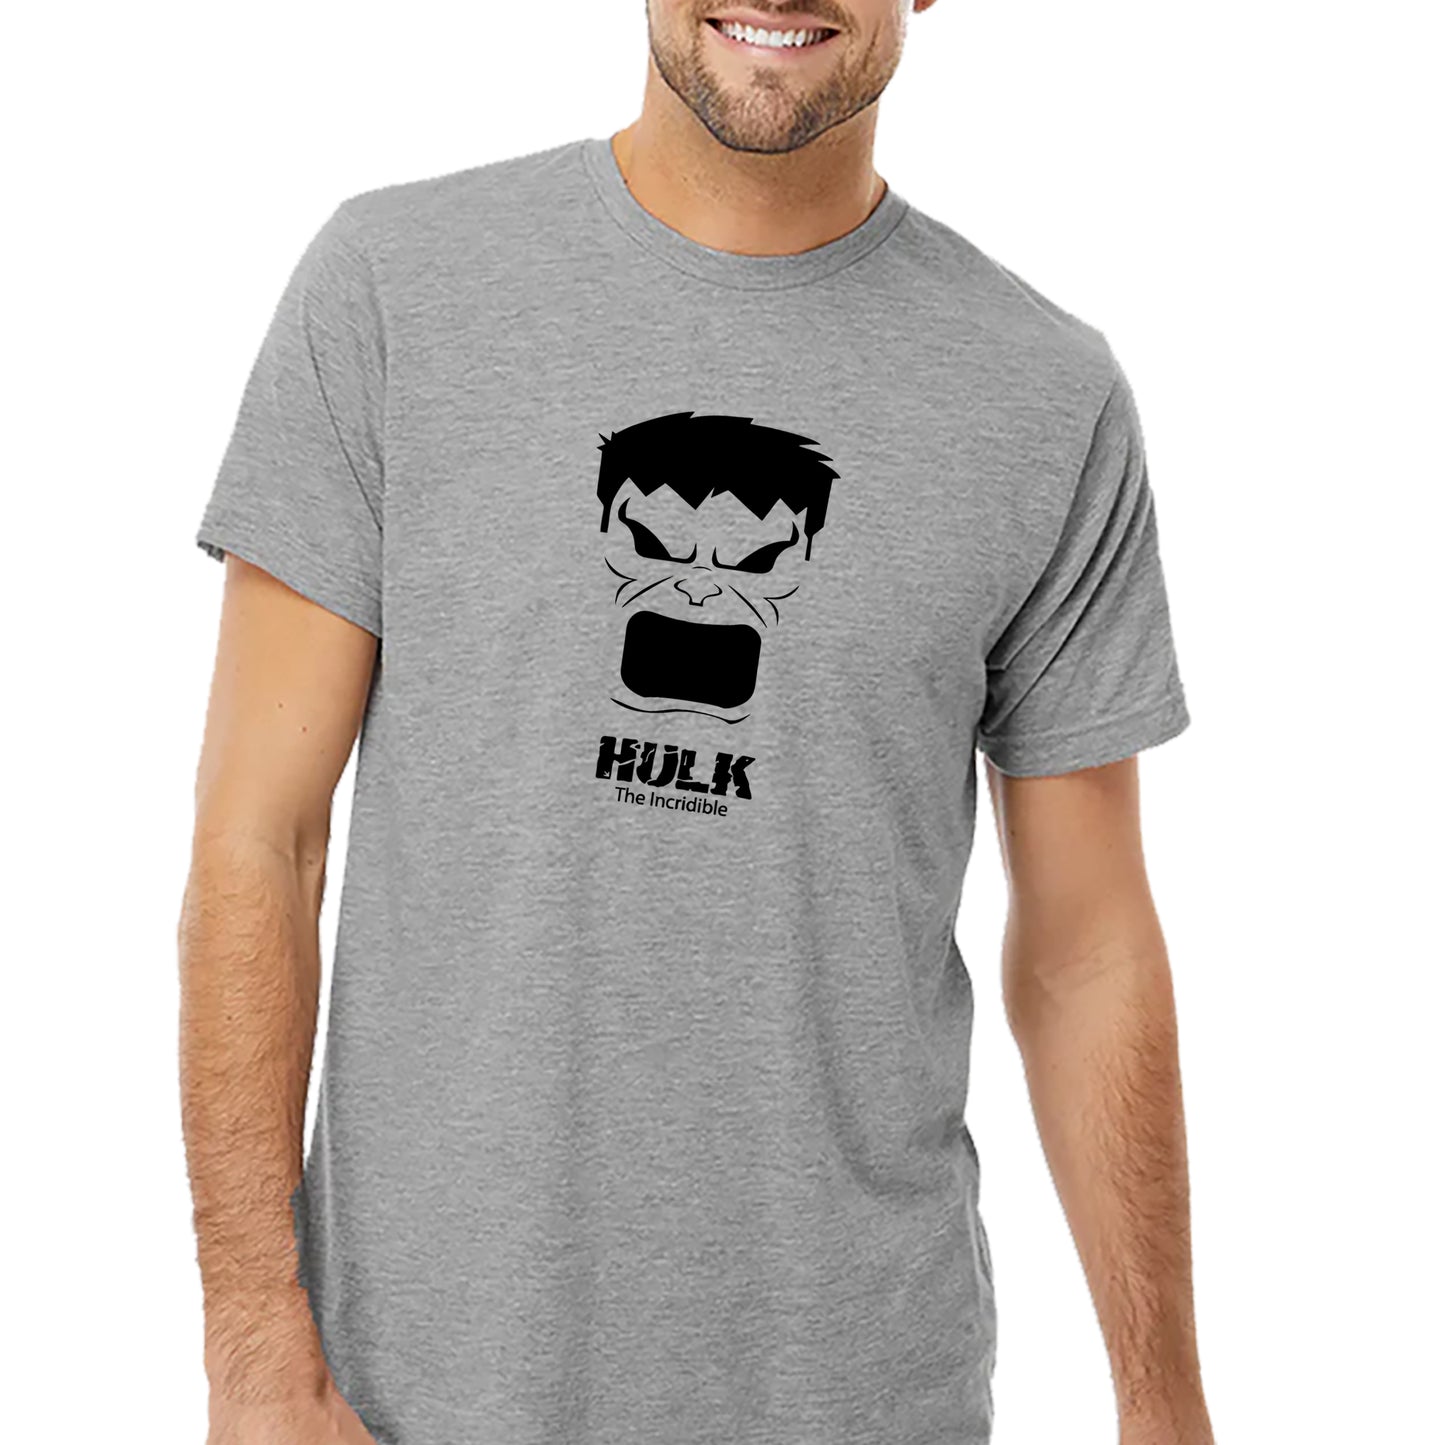 Inredible Hulk T-shirt